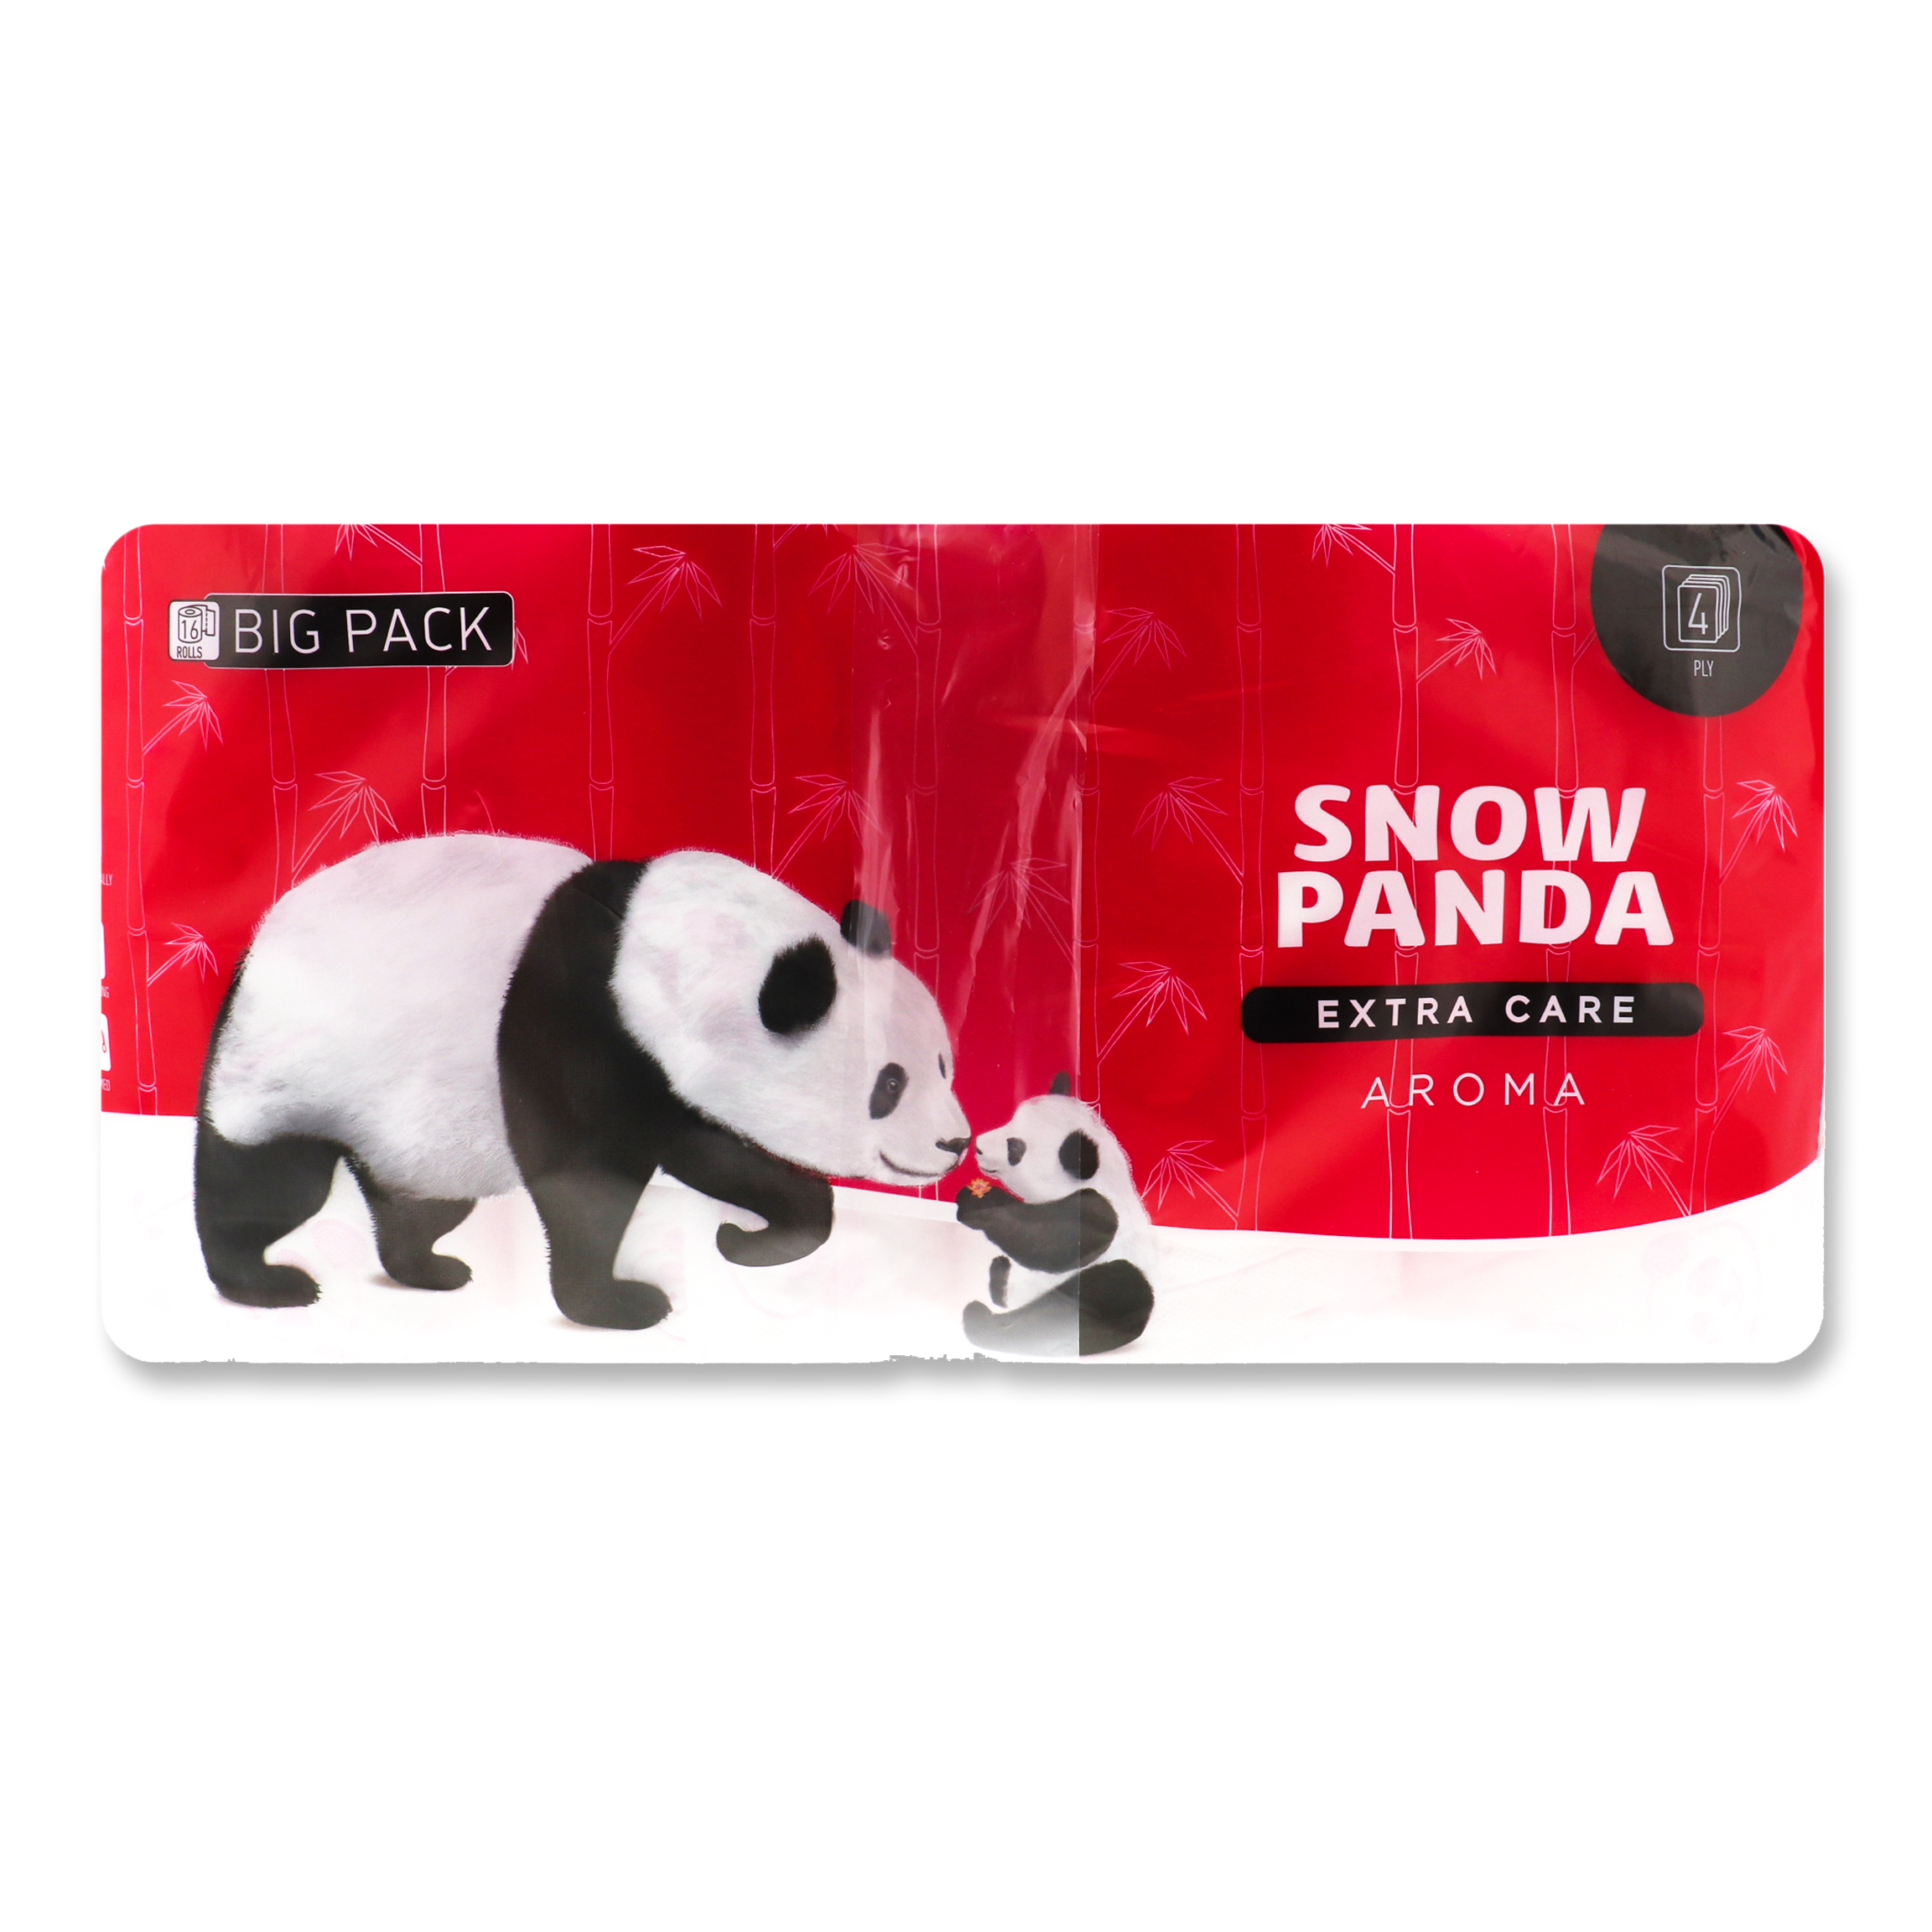 Snizhna panda Extra Care Aroma Toilet Paper 4 layer 16pcs